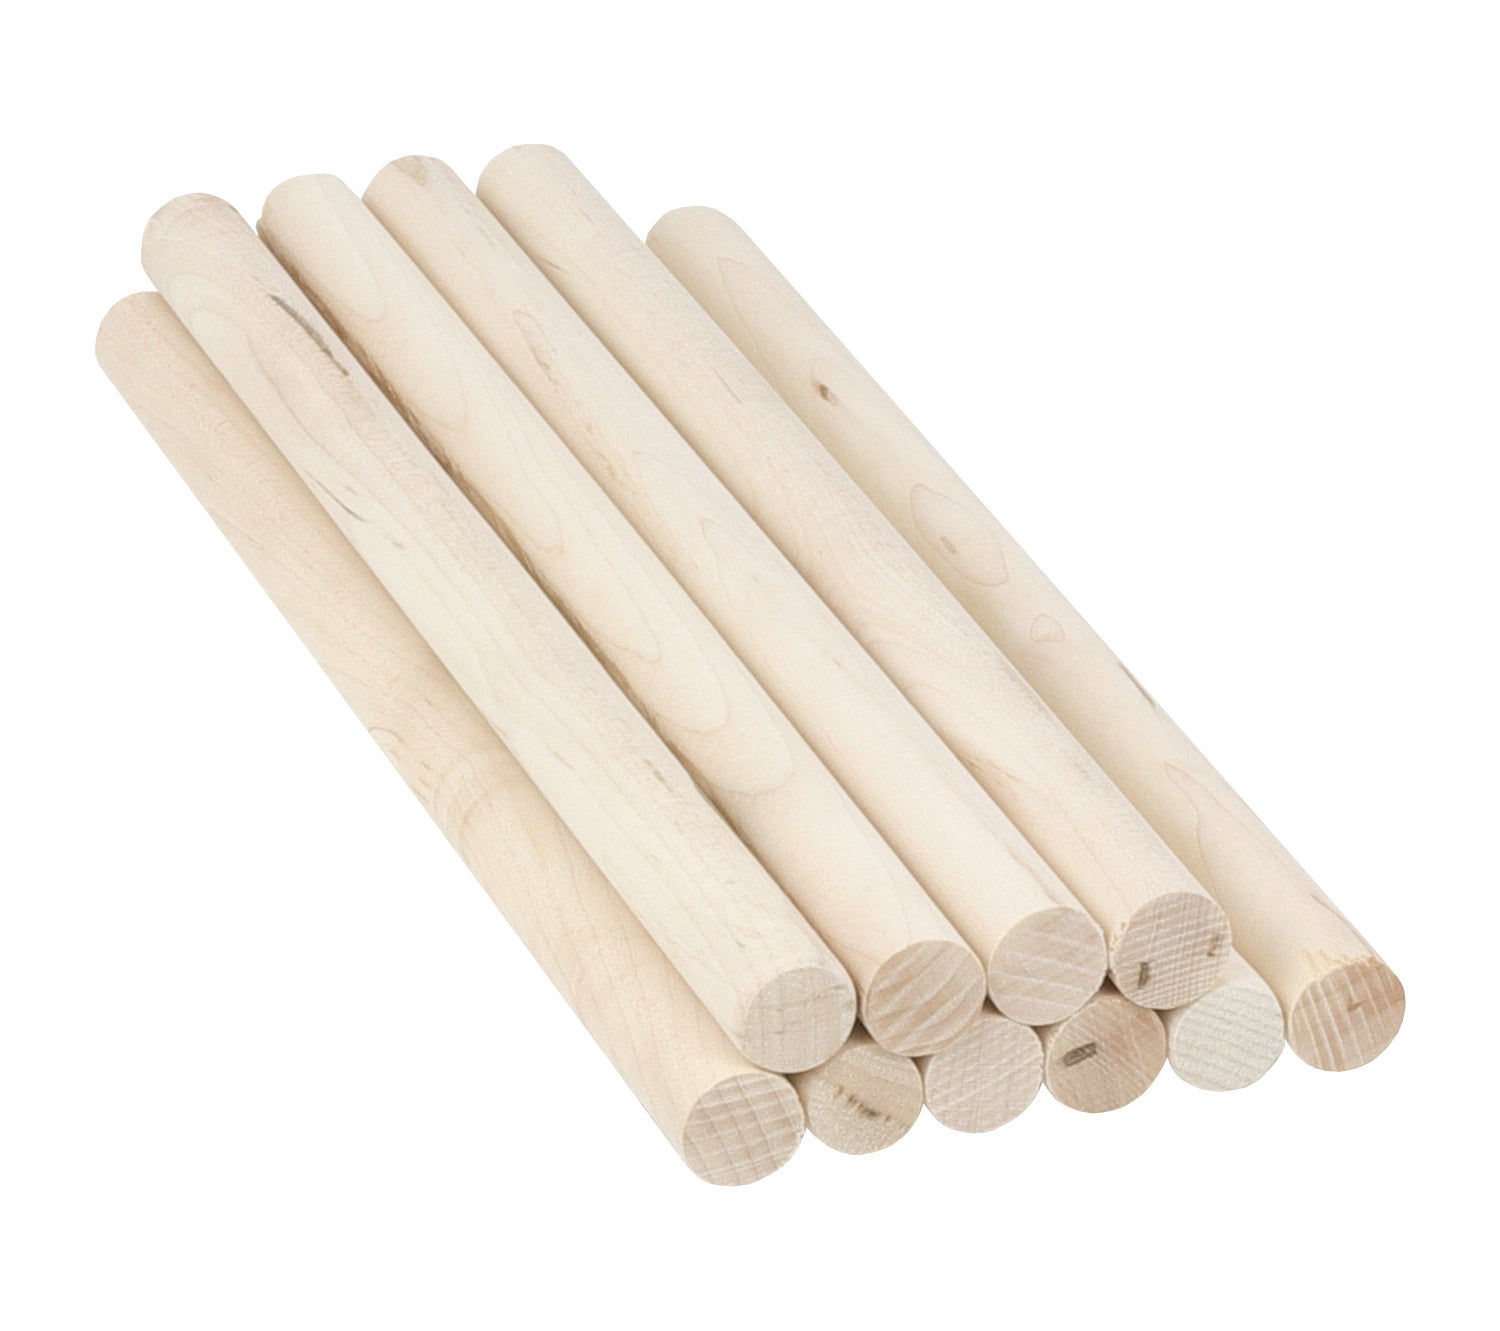 Maple Wooden Dowel Rods, 3/4 Wood Dowels, 10 Pack